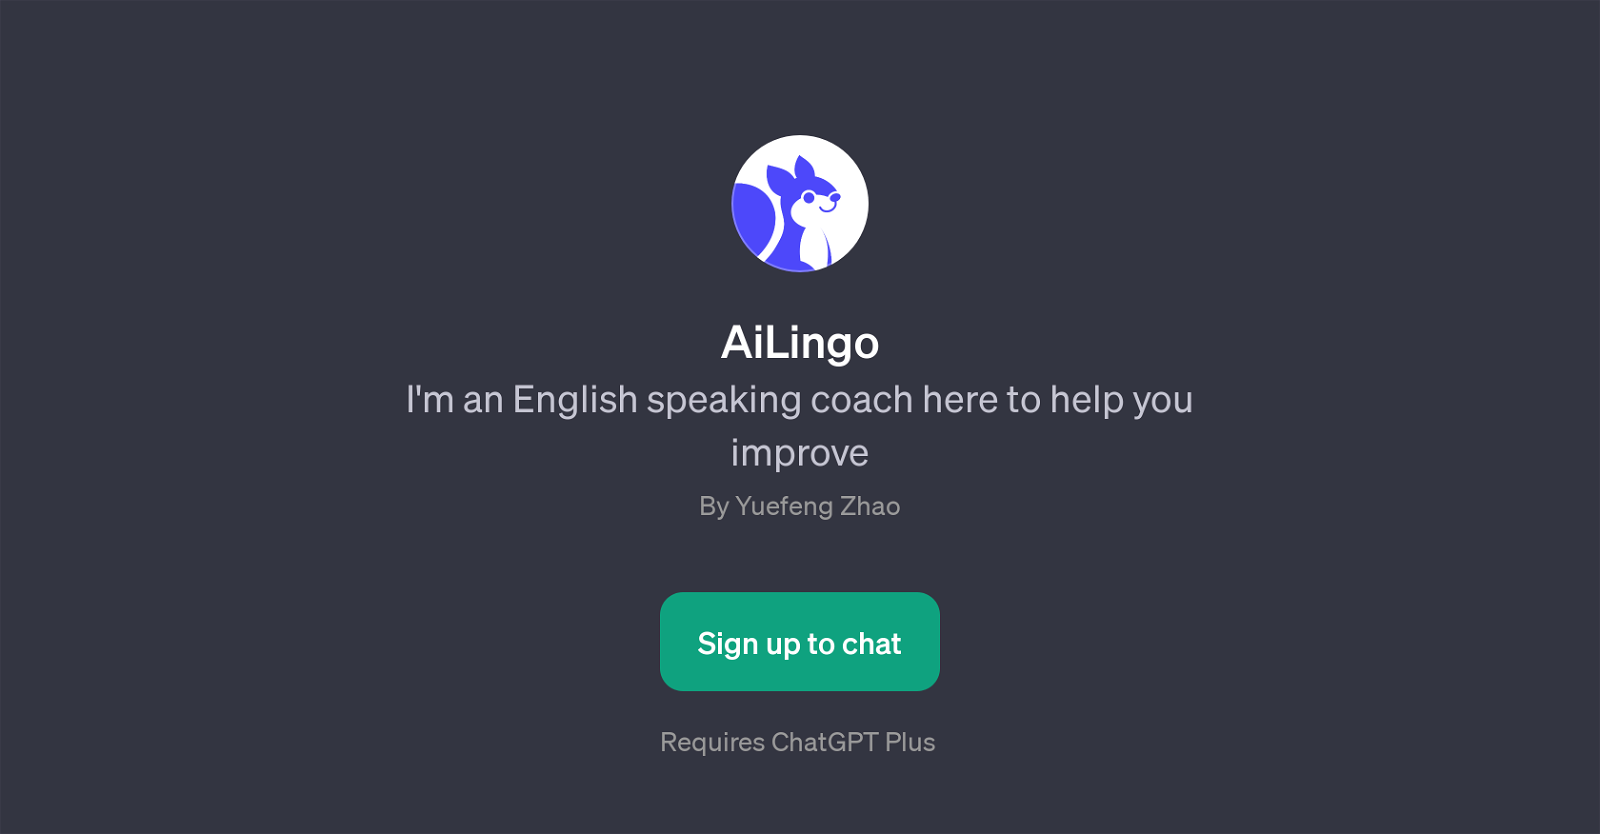 AiLingo website